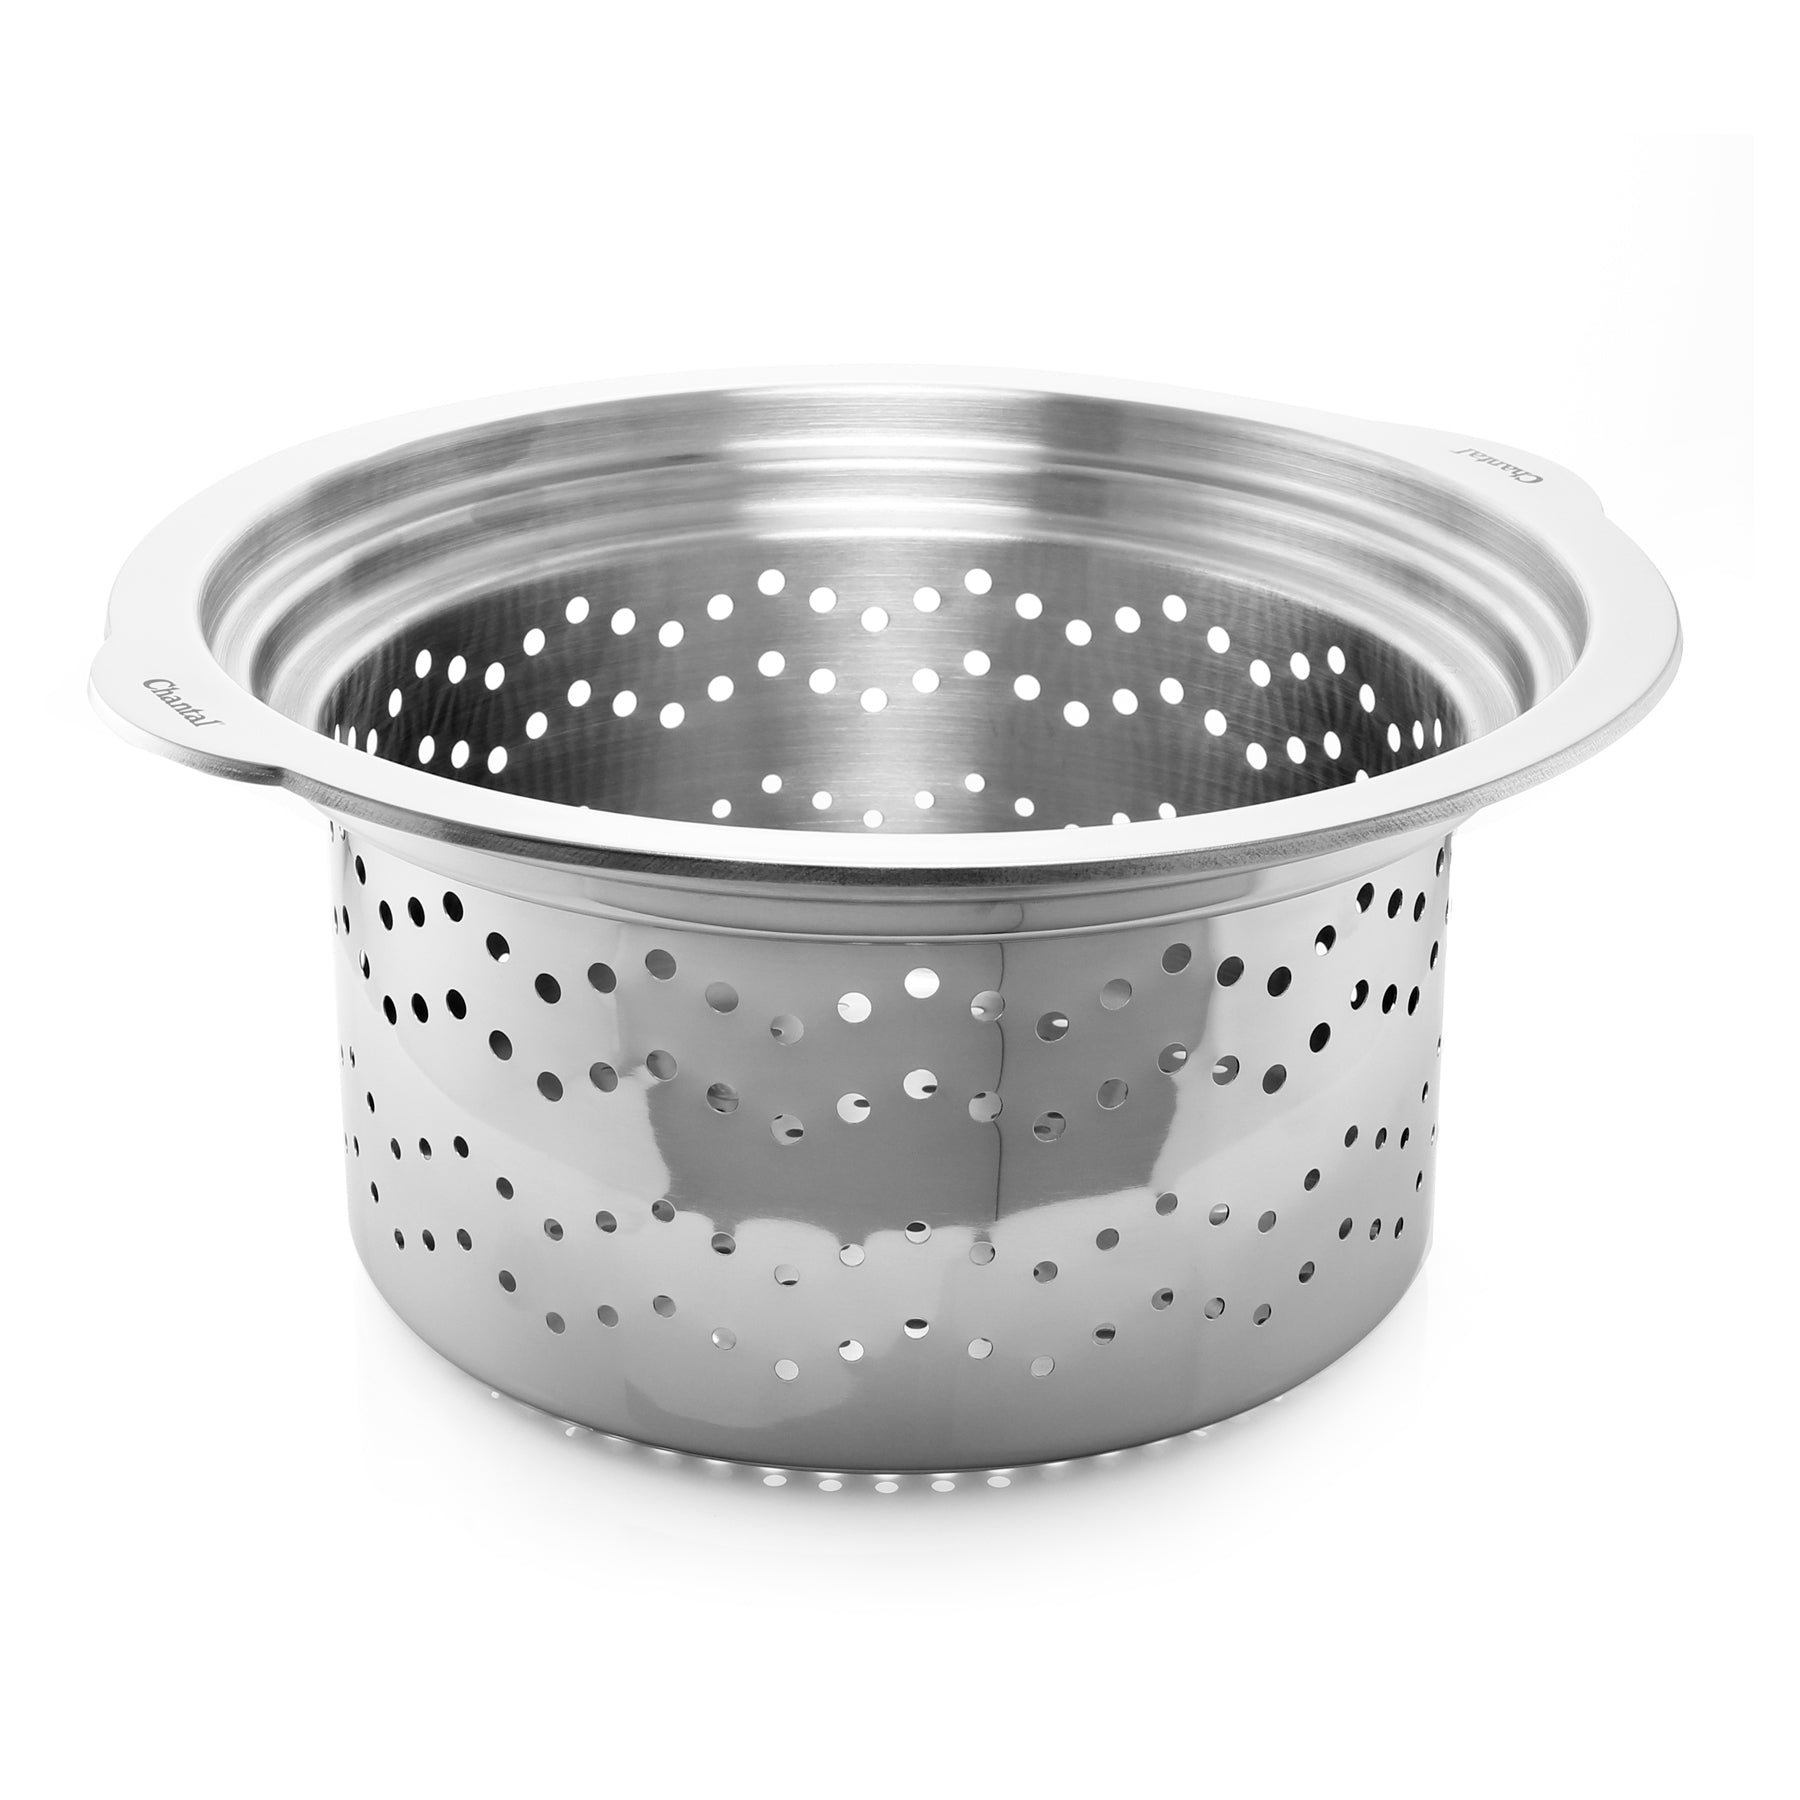 32-200S FG Chantal 4 Quart Enamel-On-Steel Soup Pot with Glass Lid